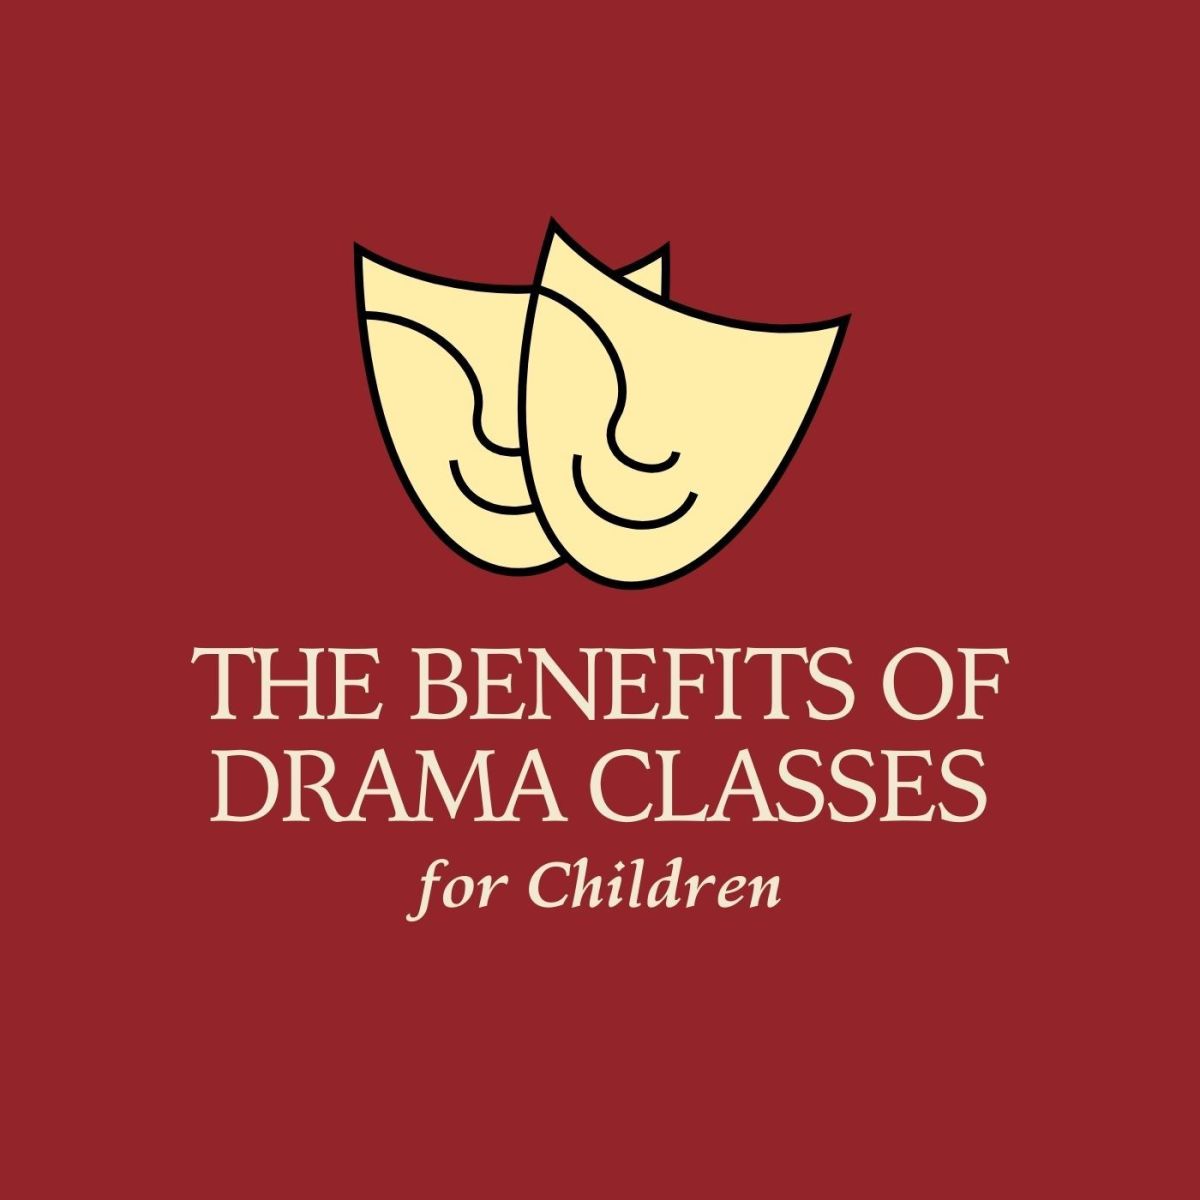 Drama classes have so many benefits.